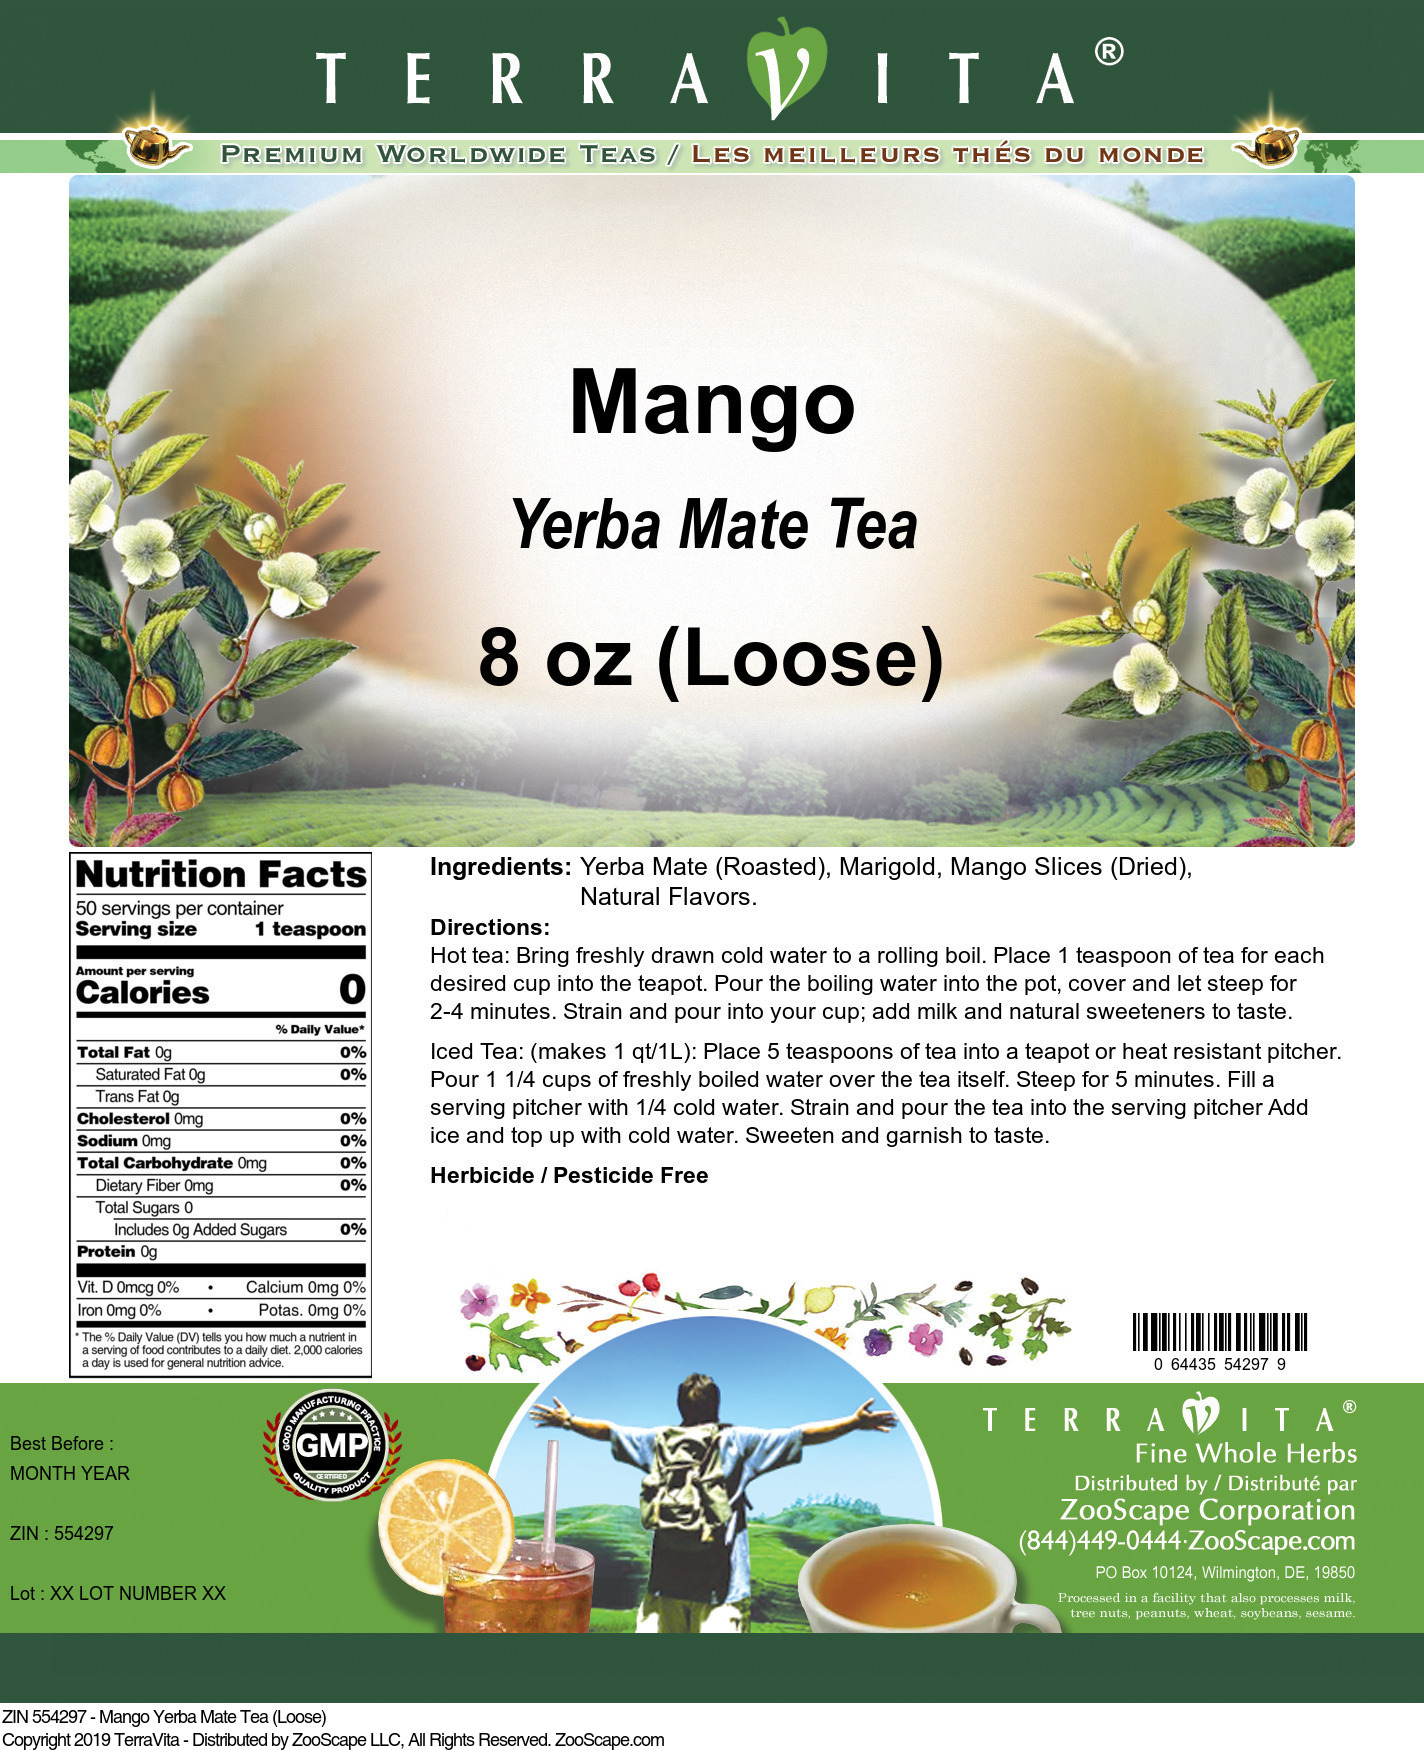 Mango Yerba Mate Tea (Loose) - Label